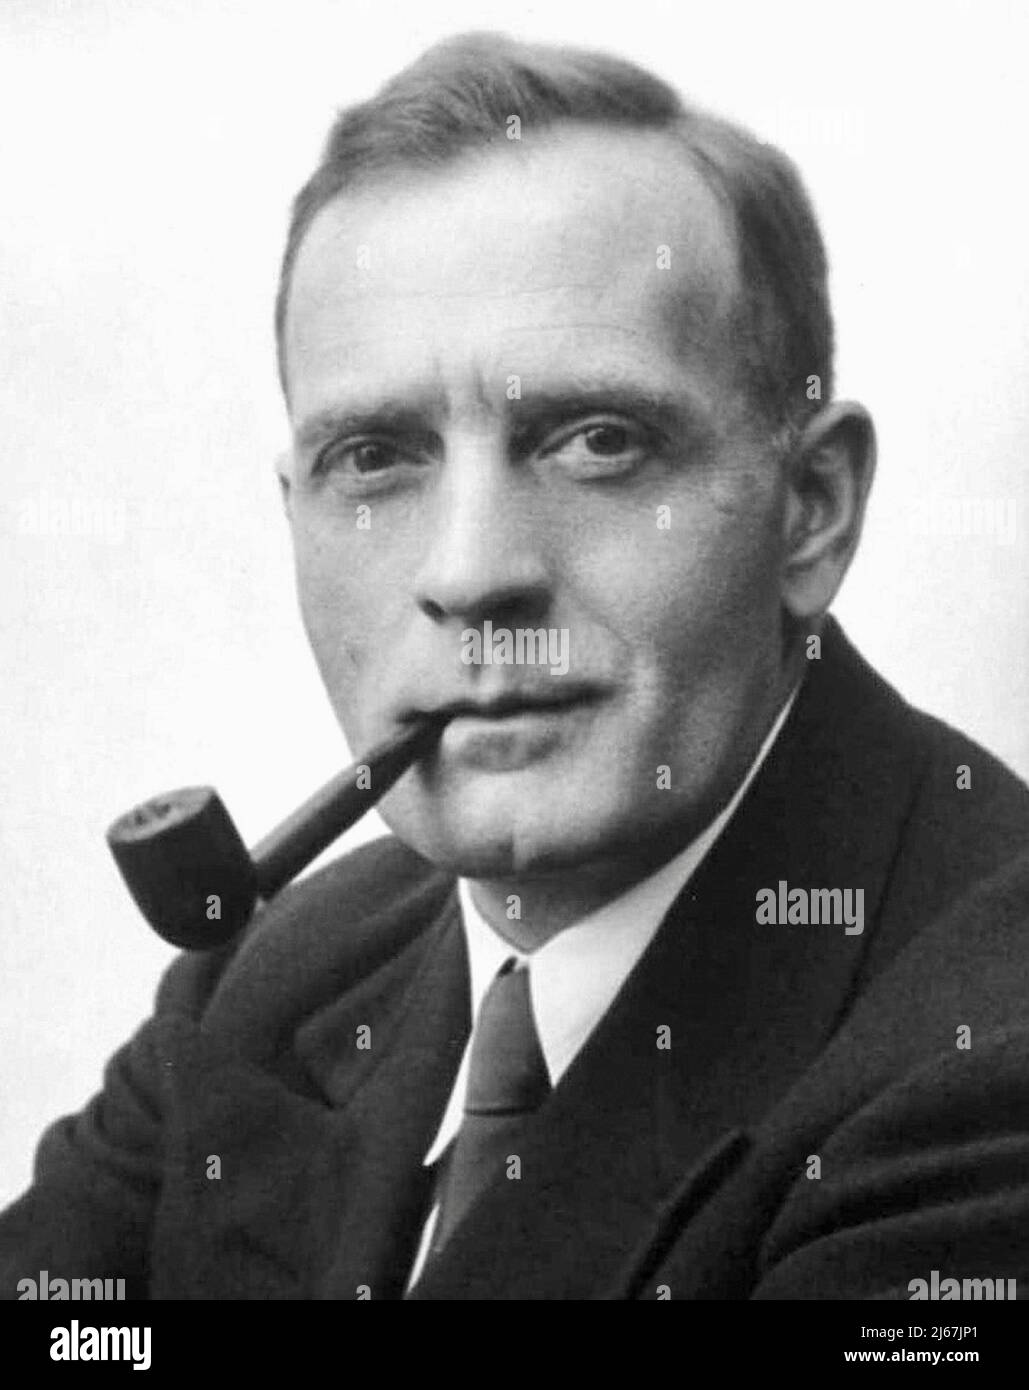 Johan Hagemeyer - photo-portrait of Edwin Powell Hubble. Stock Photo